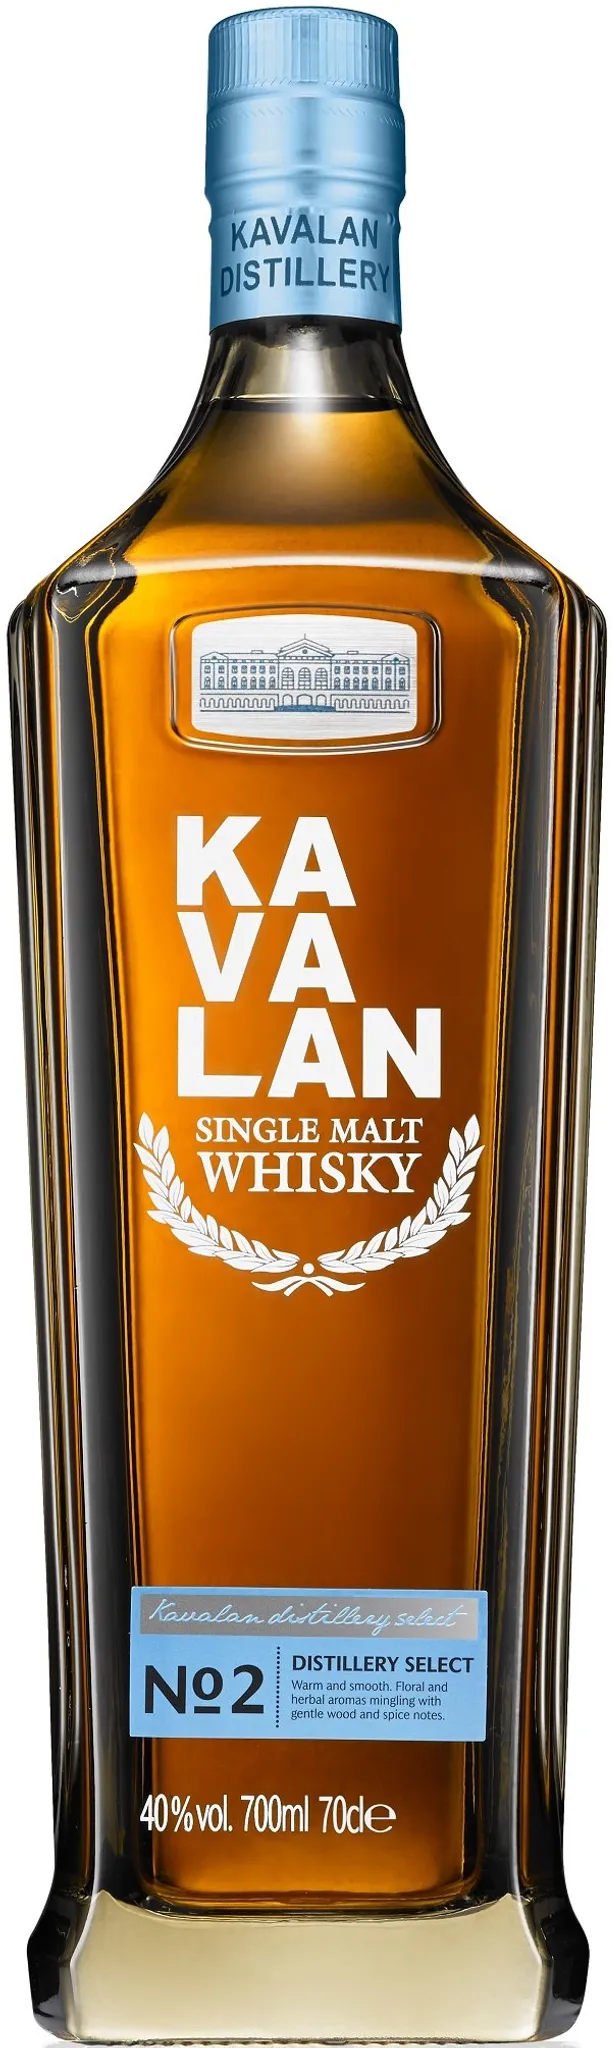 Single Whisky Whisky 40%vol NV 0.7 1 Distillery Malt ( ) x L Taiwan Select Kavalan aus No.2 Kavalan